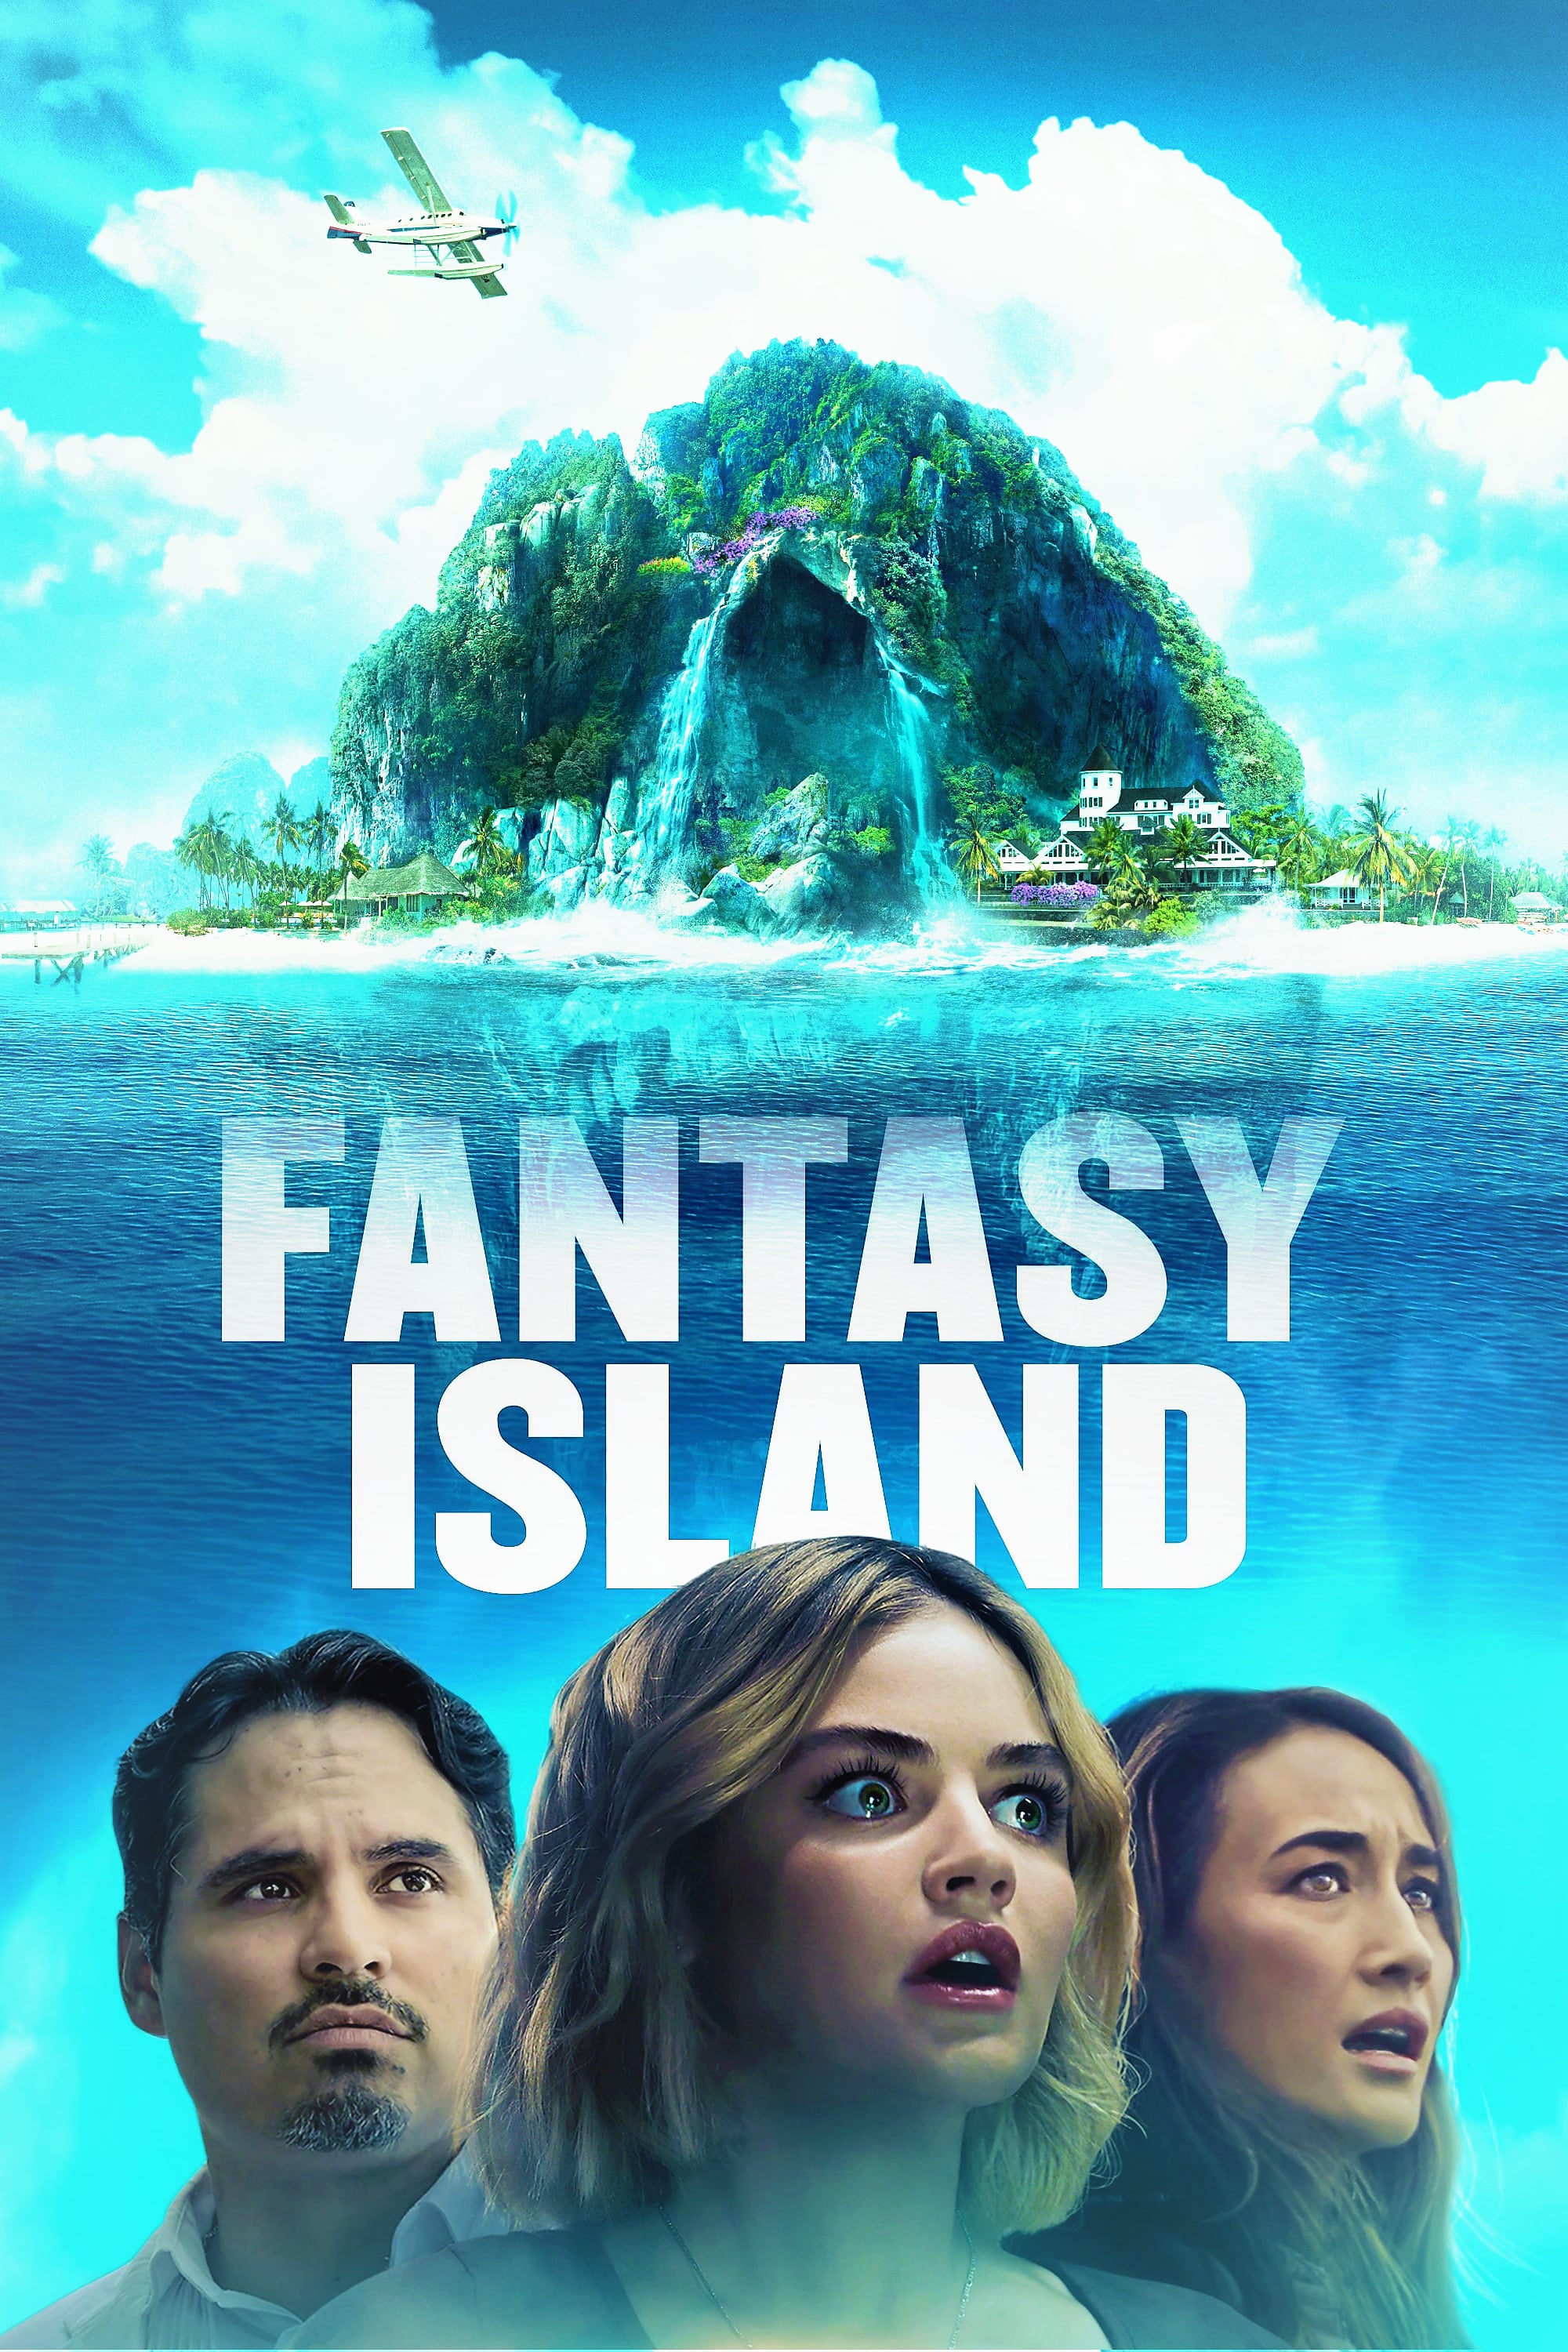 Fantasy Island (2020) Main Poster